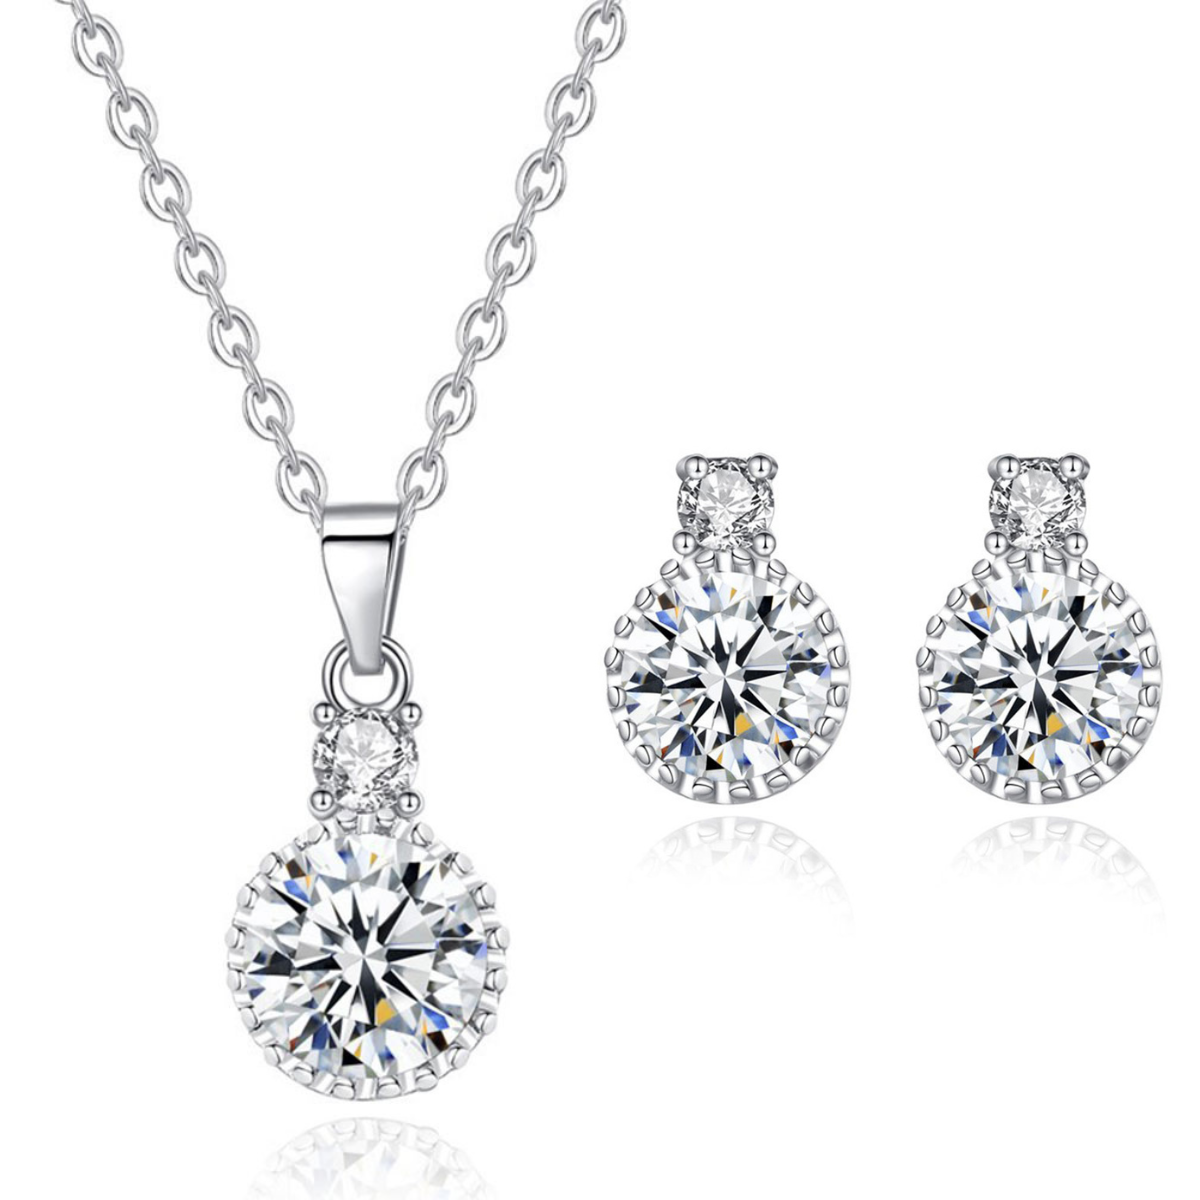 10pcs - Elegant Sparkling Round Crystal Pendant Necklace and Stud Earrings Set|GCJ416|UK seller